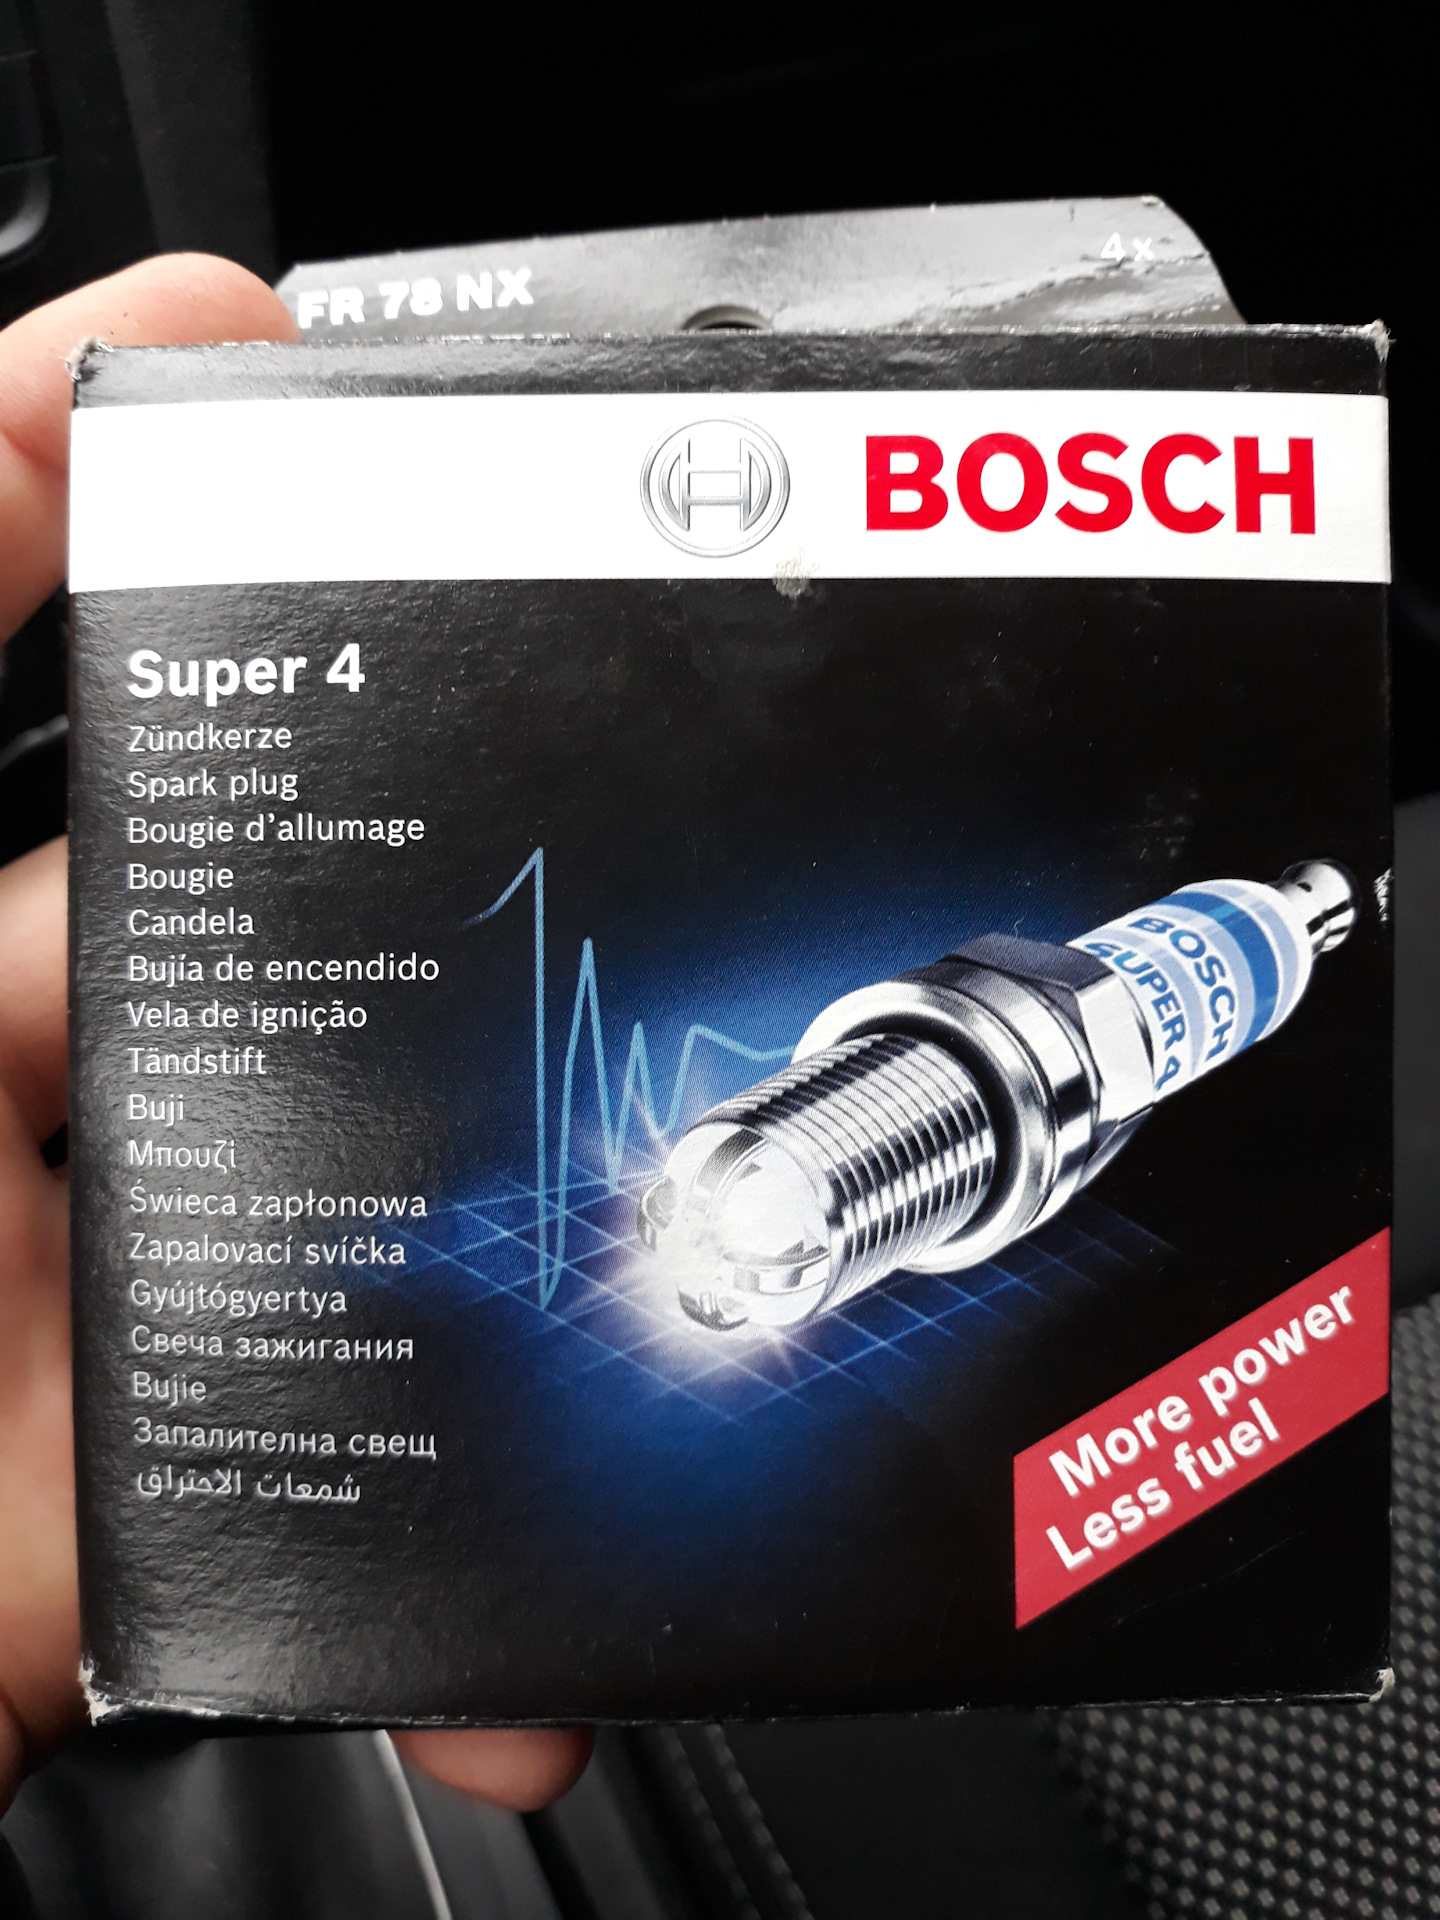 Bosch super 4. Свечи бош r6. Бош супер 4. Свечи бош супер + 2 контактные. Свечи зажигания Bosch super 4 r6.